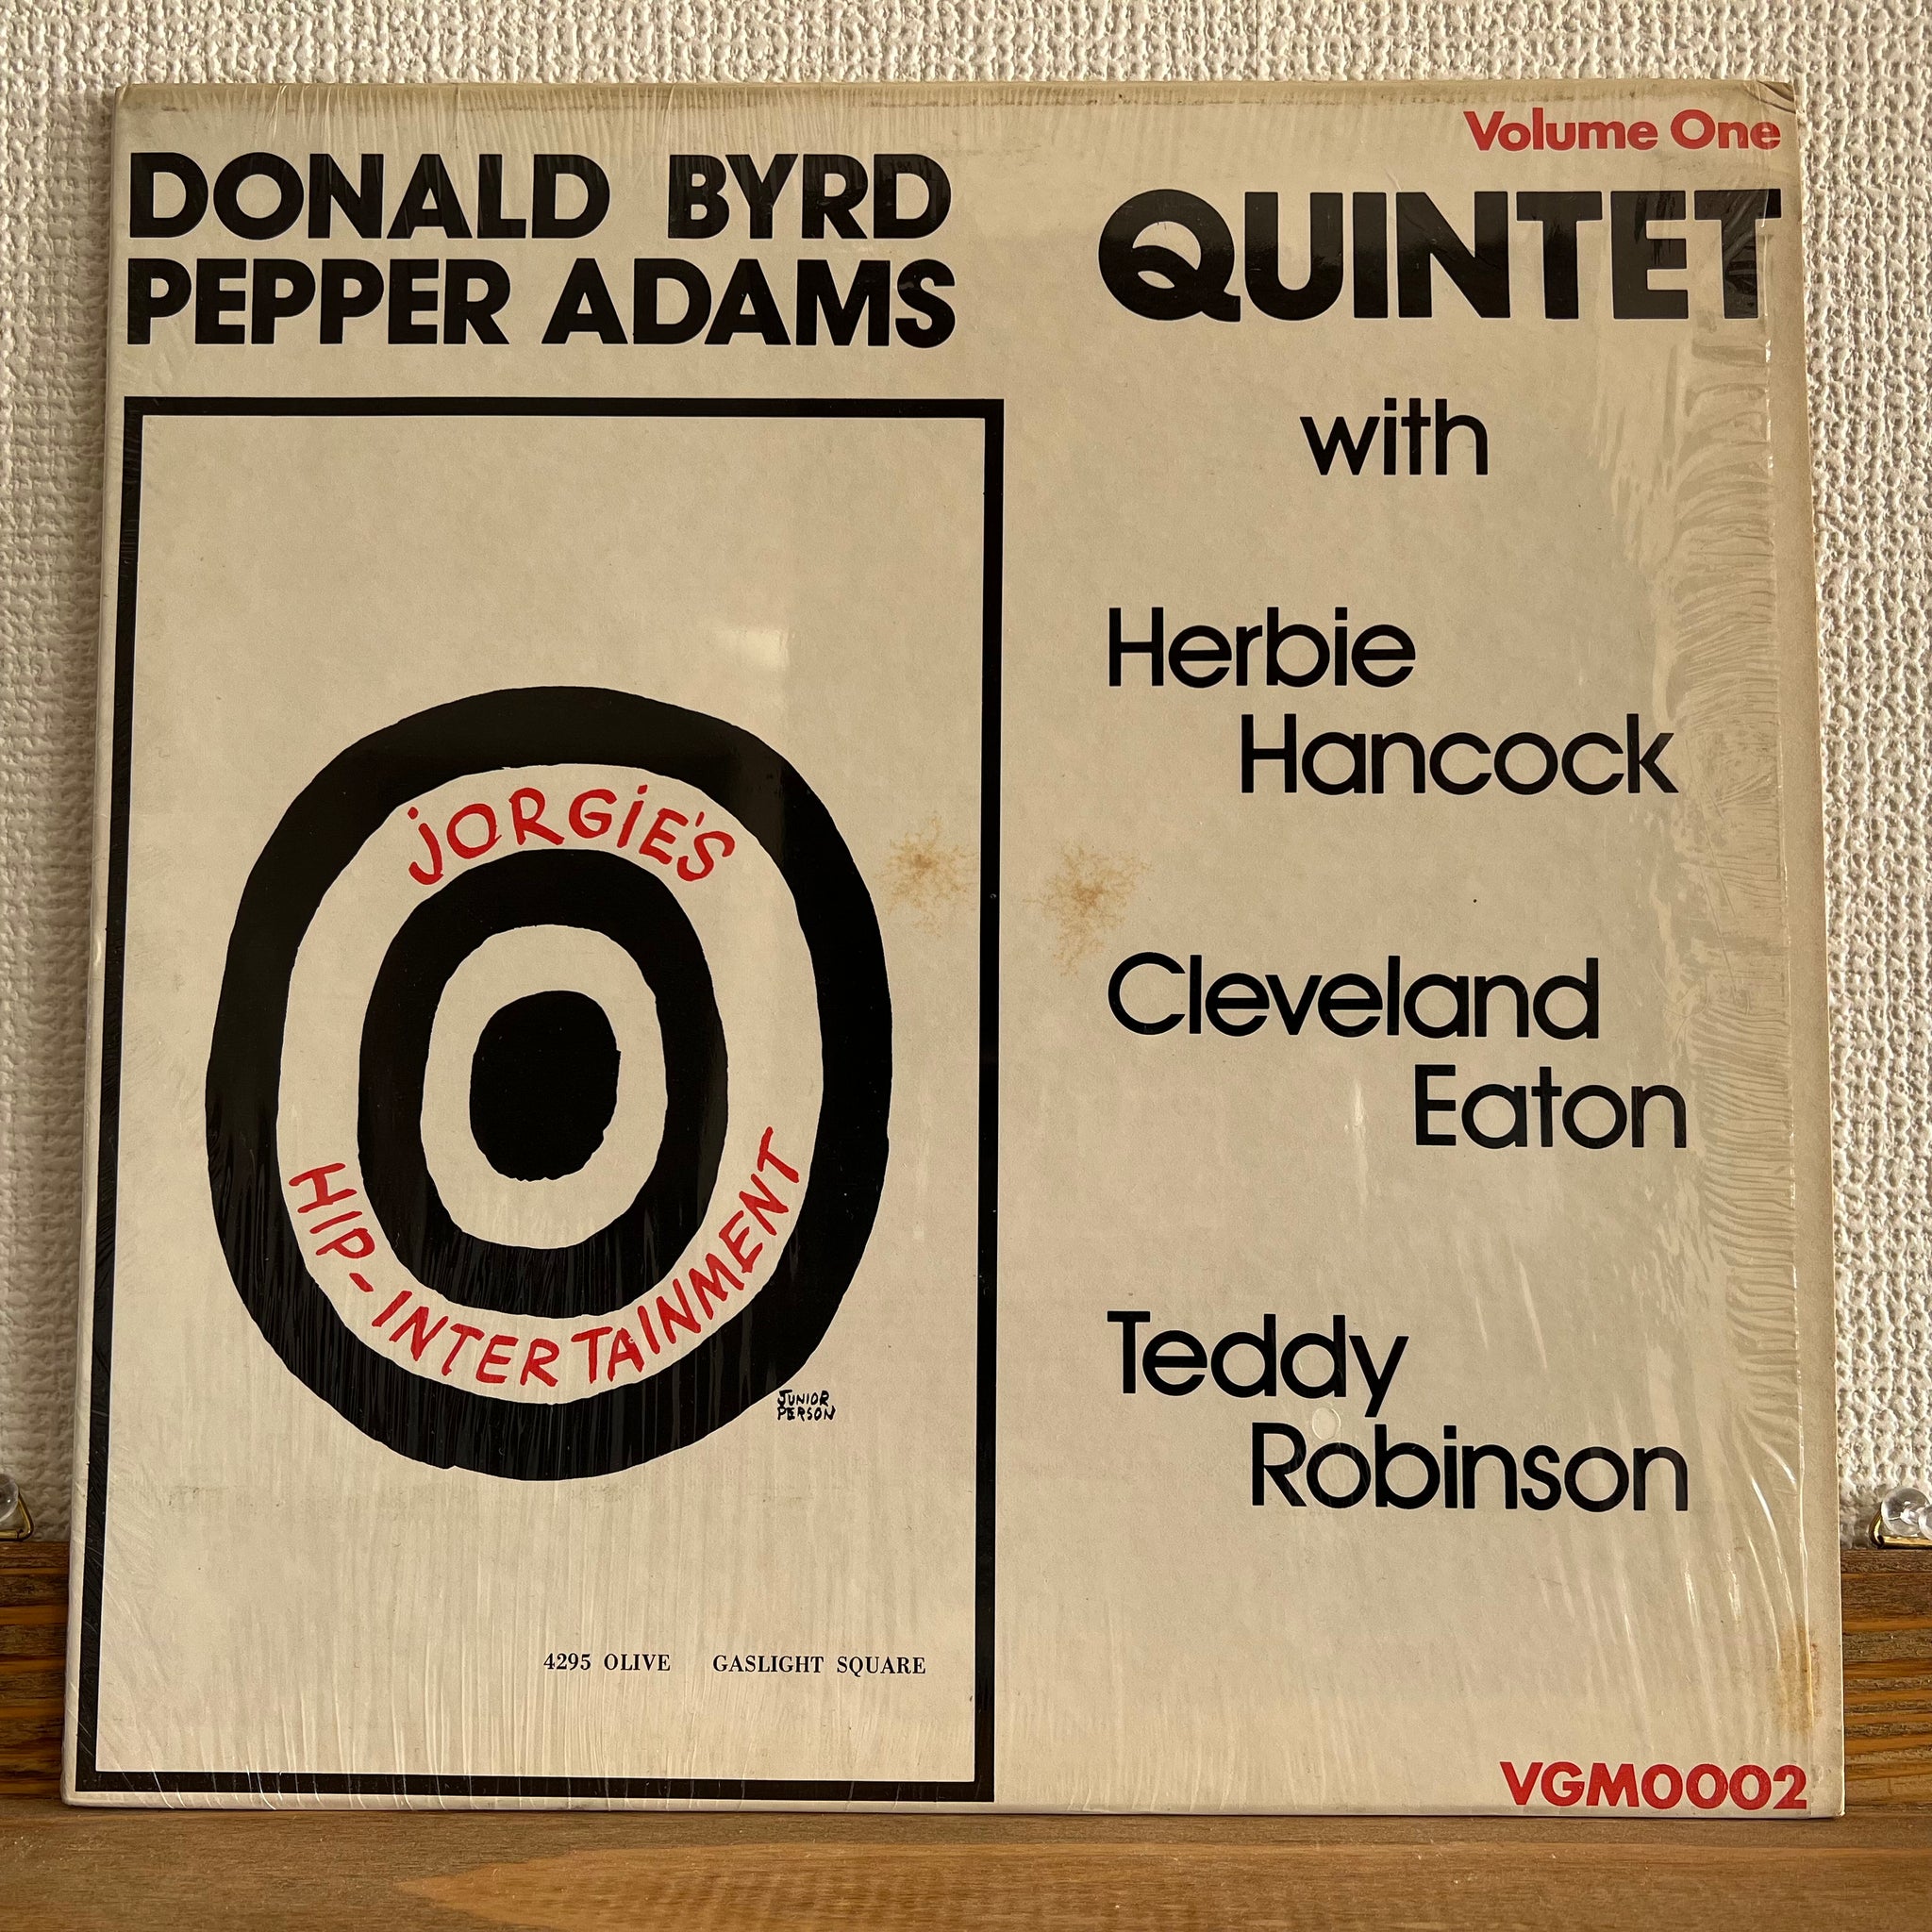 Donald Byrd Pepper Adams Quintet - Jorgie's Hip-Intertainment Volume One